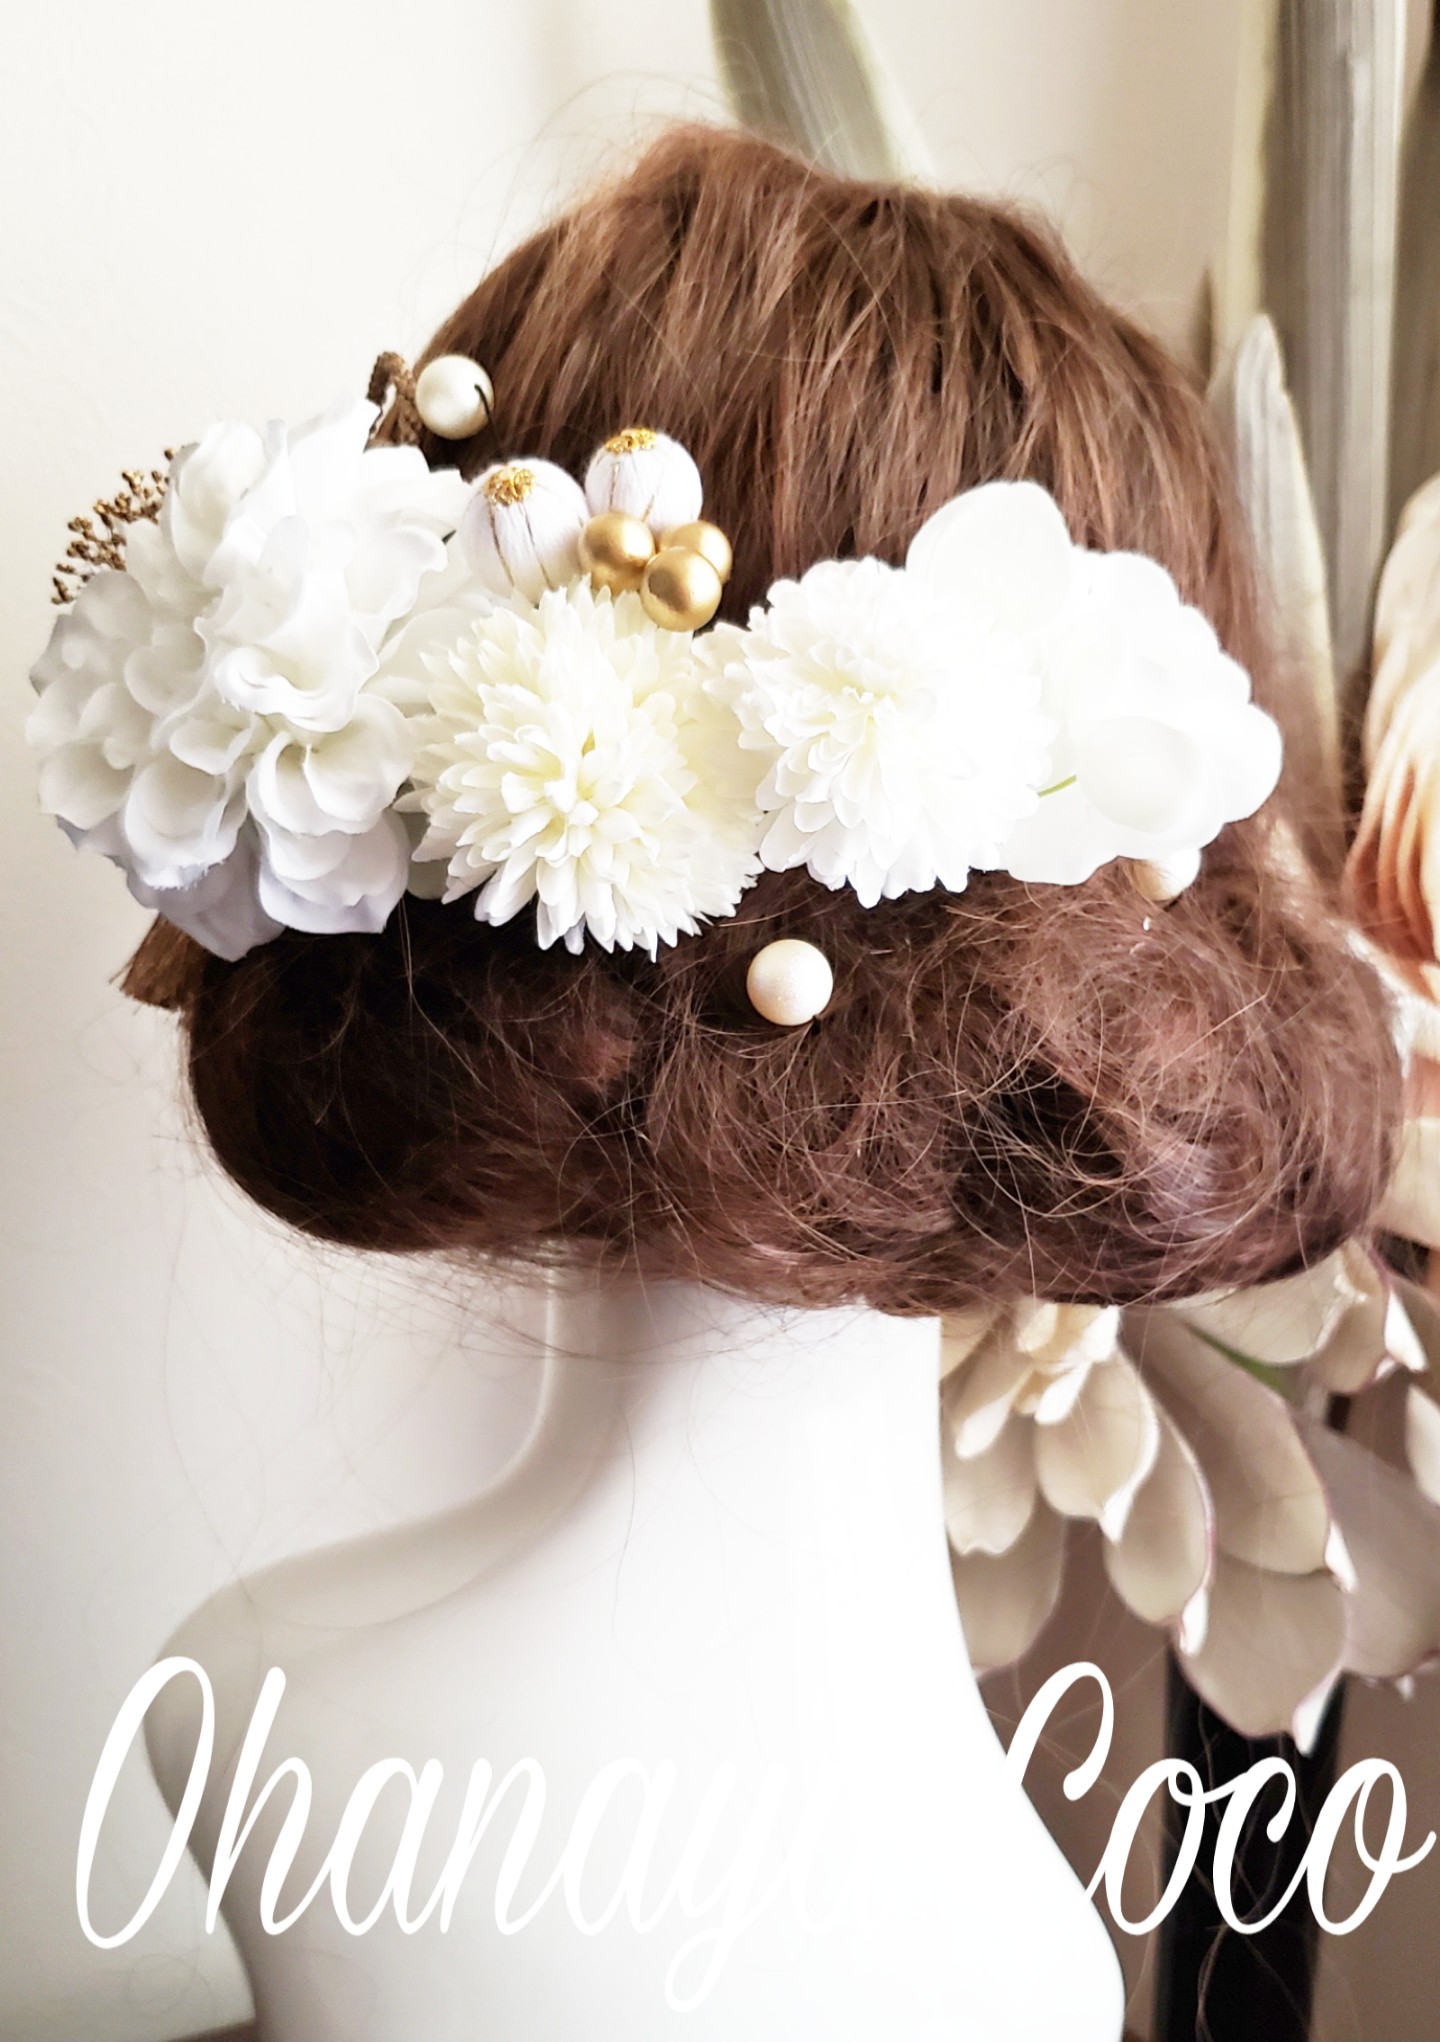 White系ダリアのヘッドドレス12点set No763 結婚式 髪飾り Iichi ハンドメイド クラフト作品 手仕事品の通販